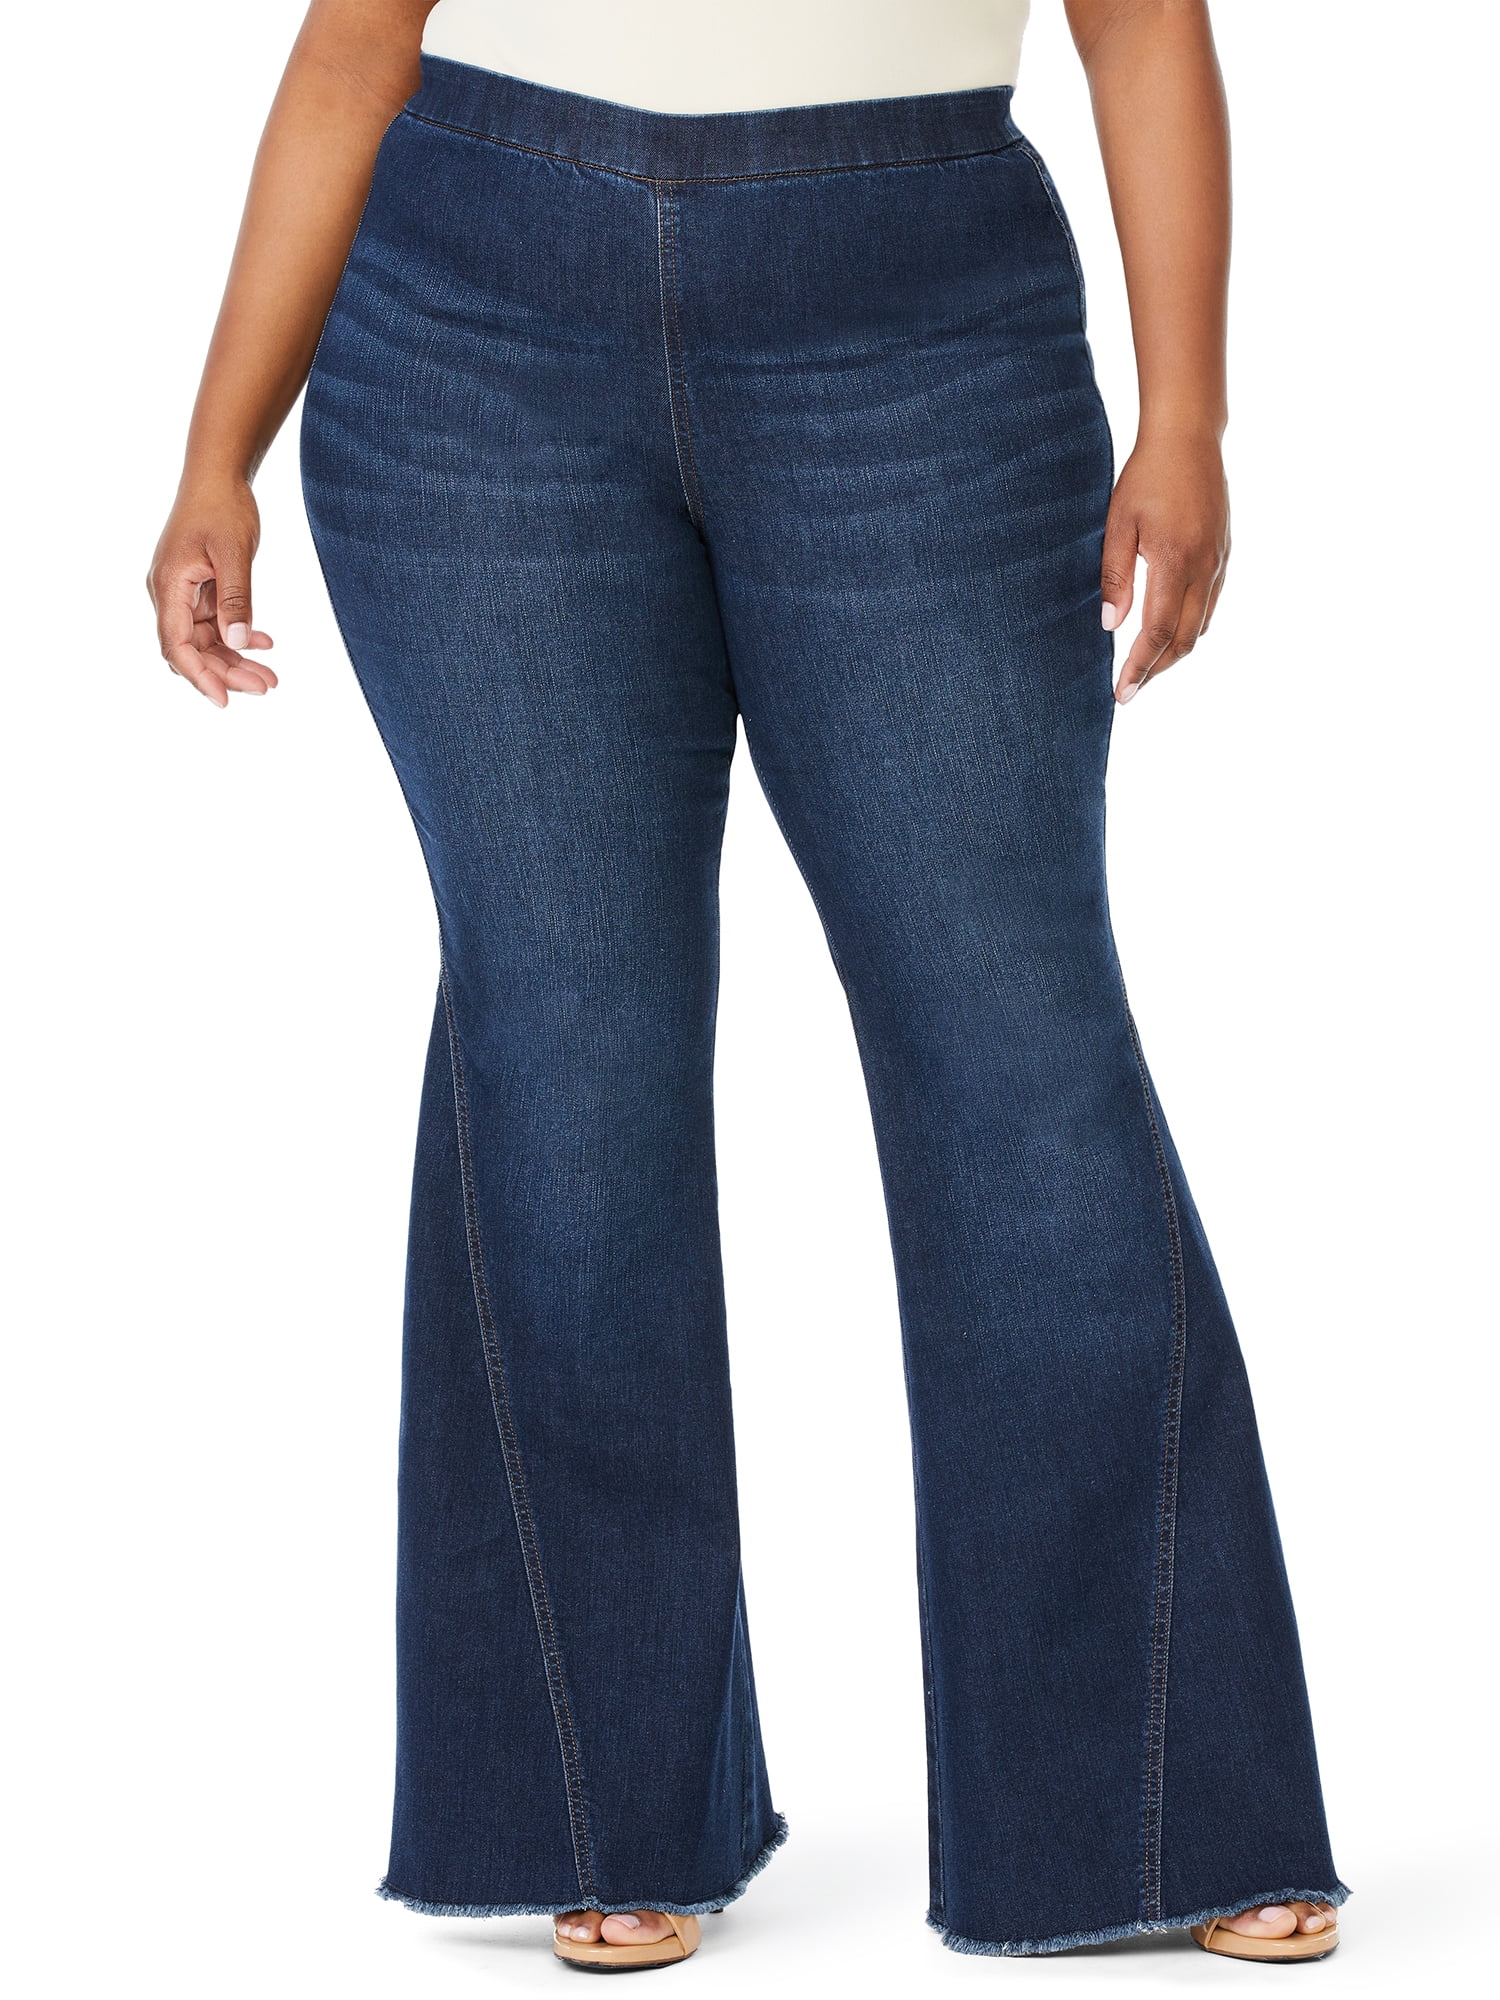 Jeans Women's Plus Size Melisa High-Rise Super Pull-On Jeans - Walmart.com